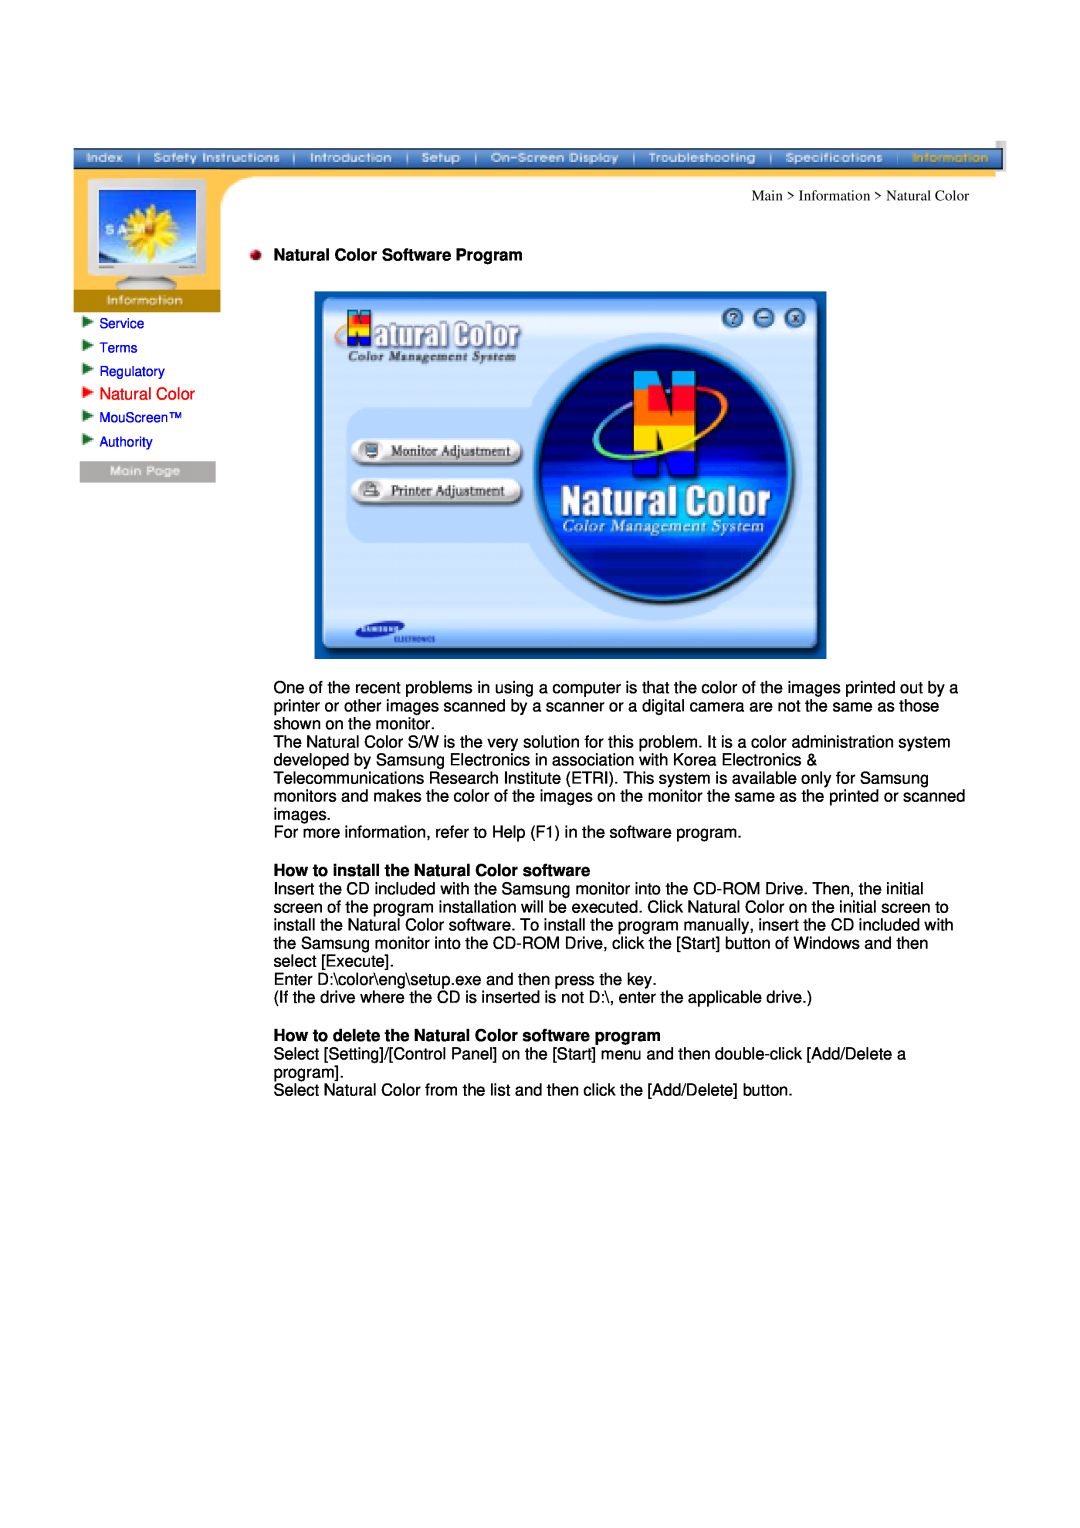 Samsung 957D manual Natural Color Software Program, How to install the Natural Color software 